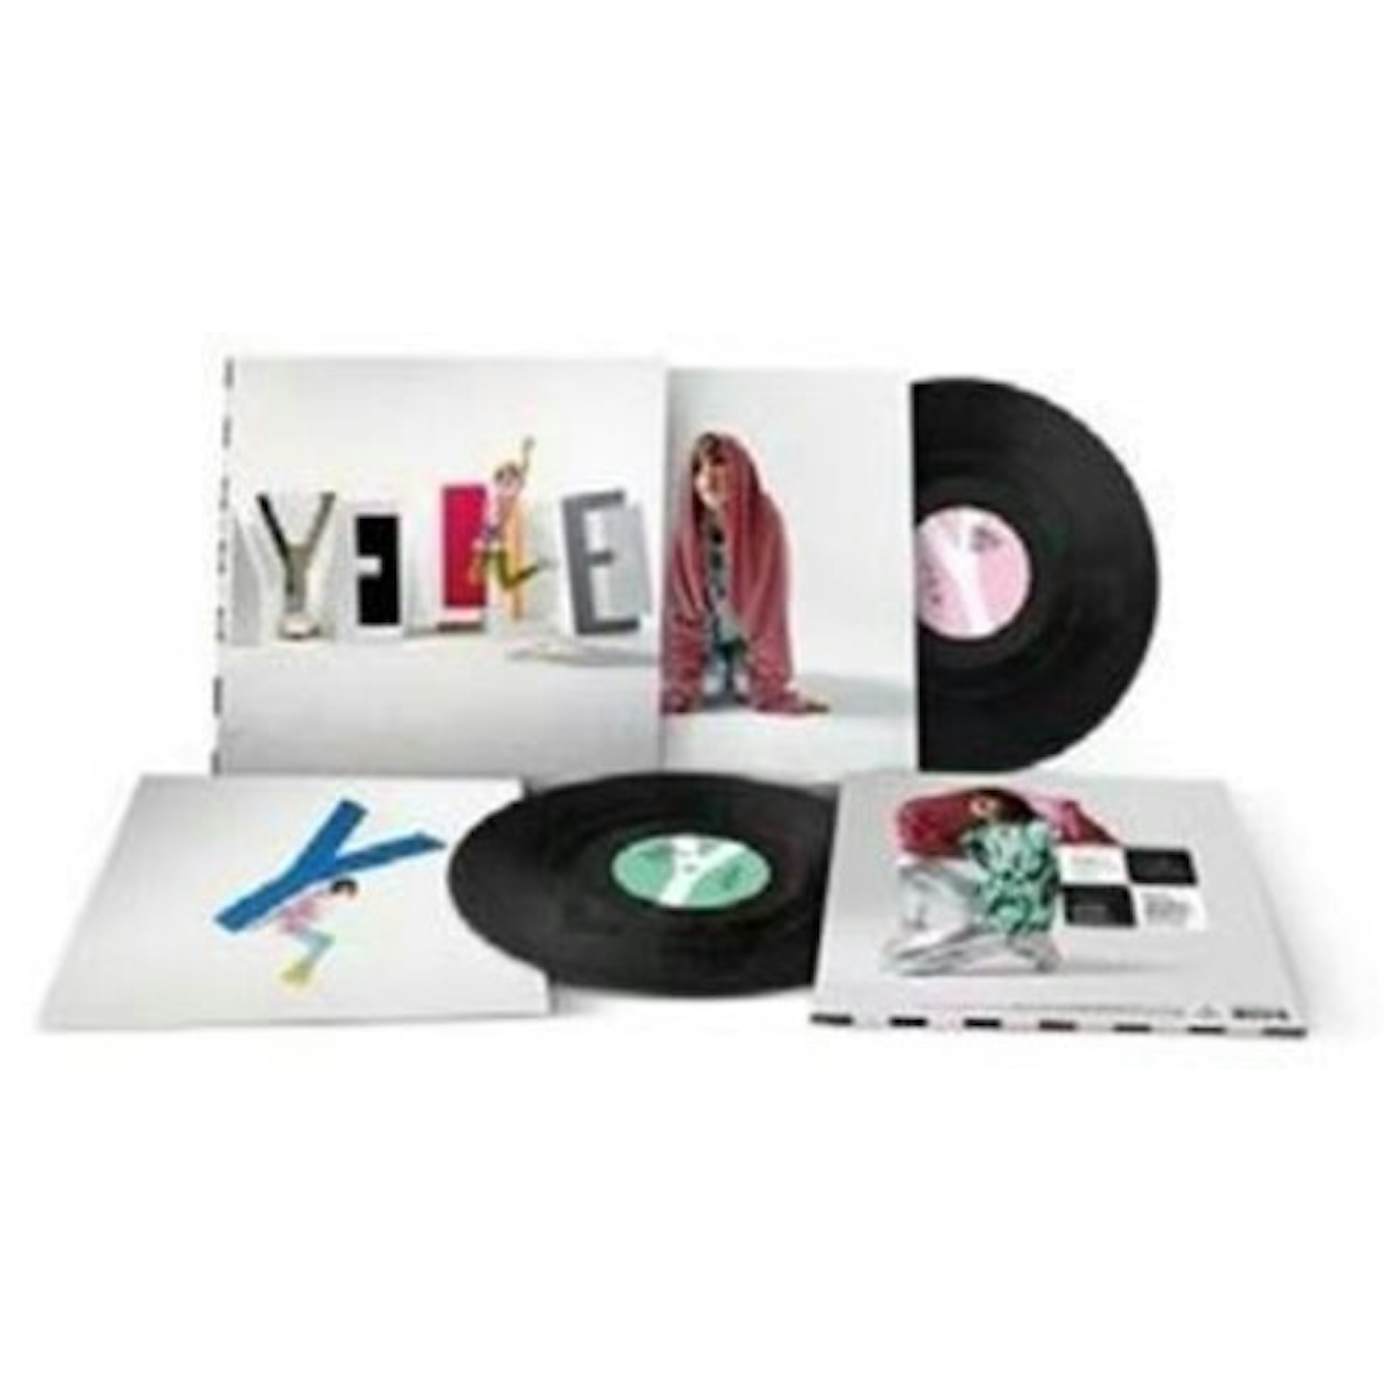 Yelle POP UP Vinyl Record